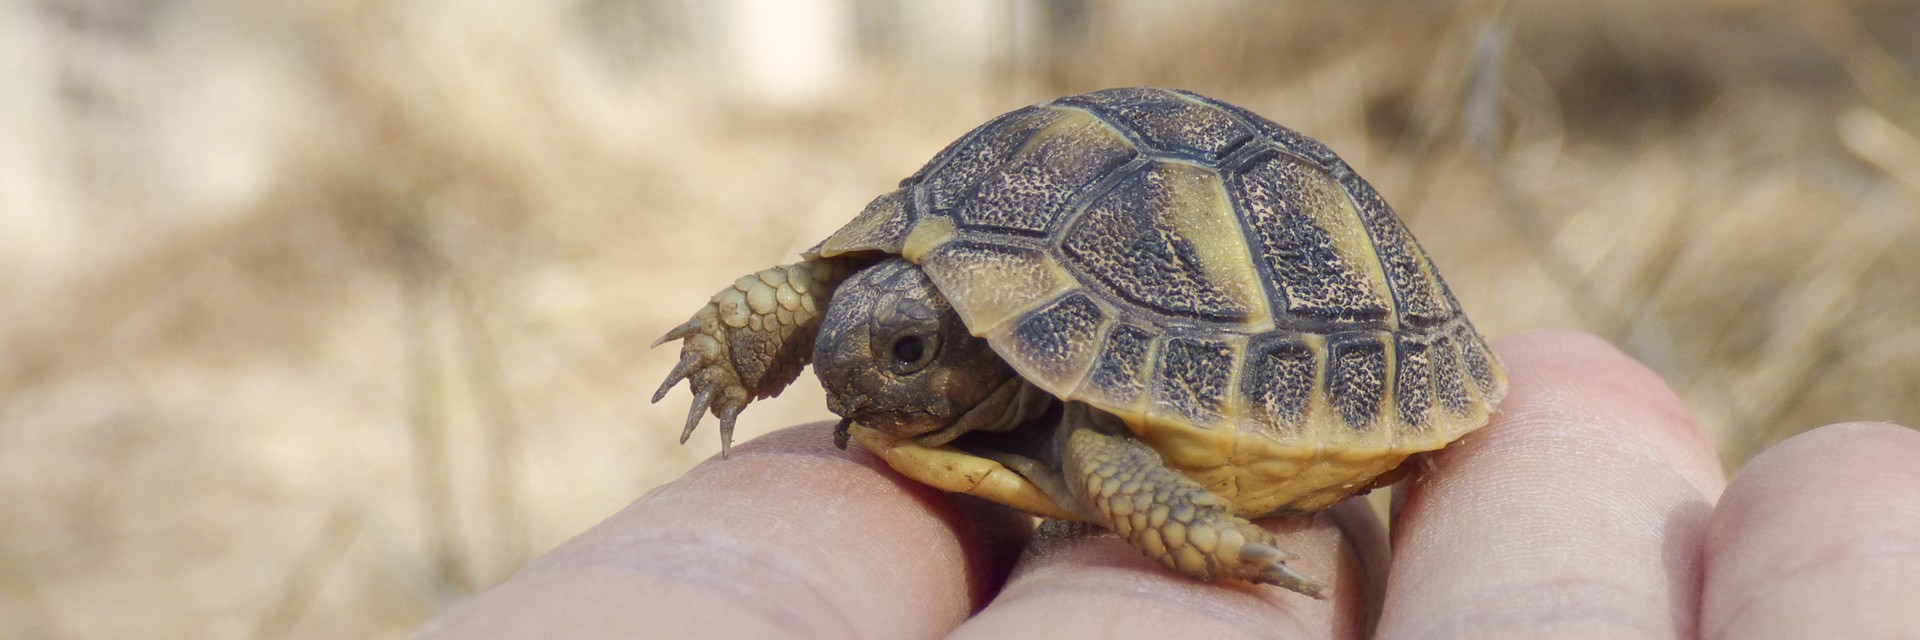 Genetic reserve and captive breeding for the Hermann’s tortoise